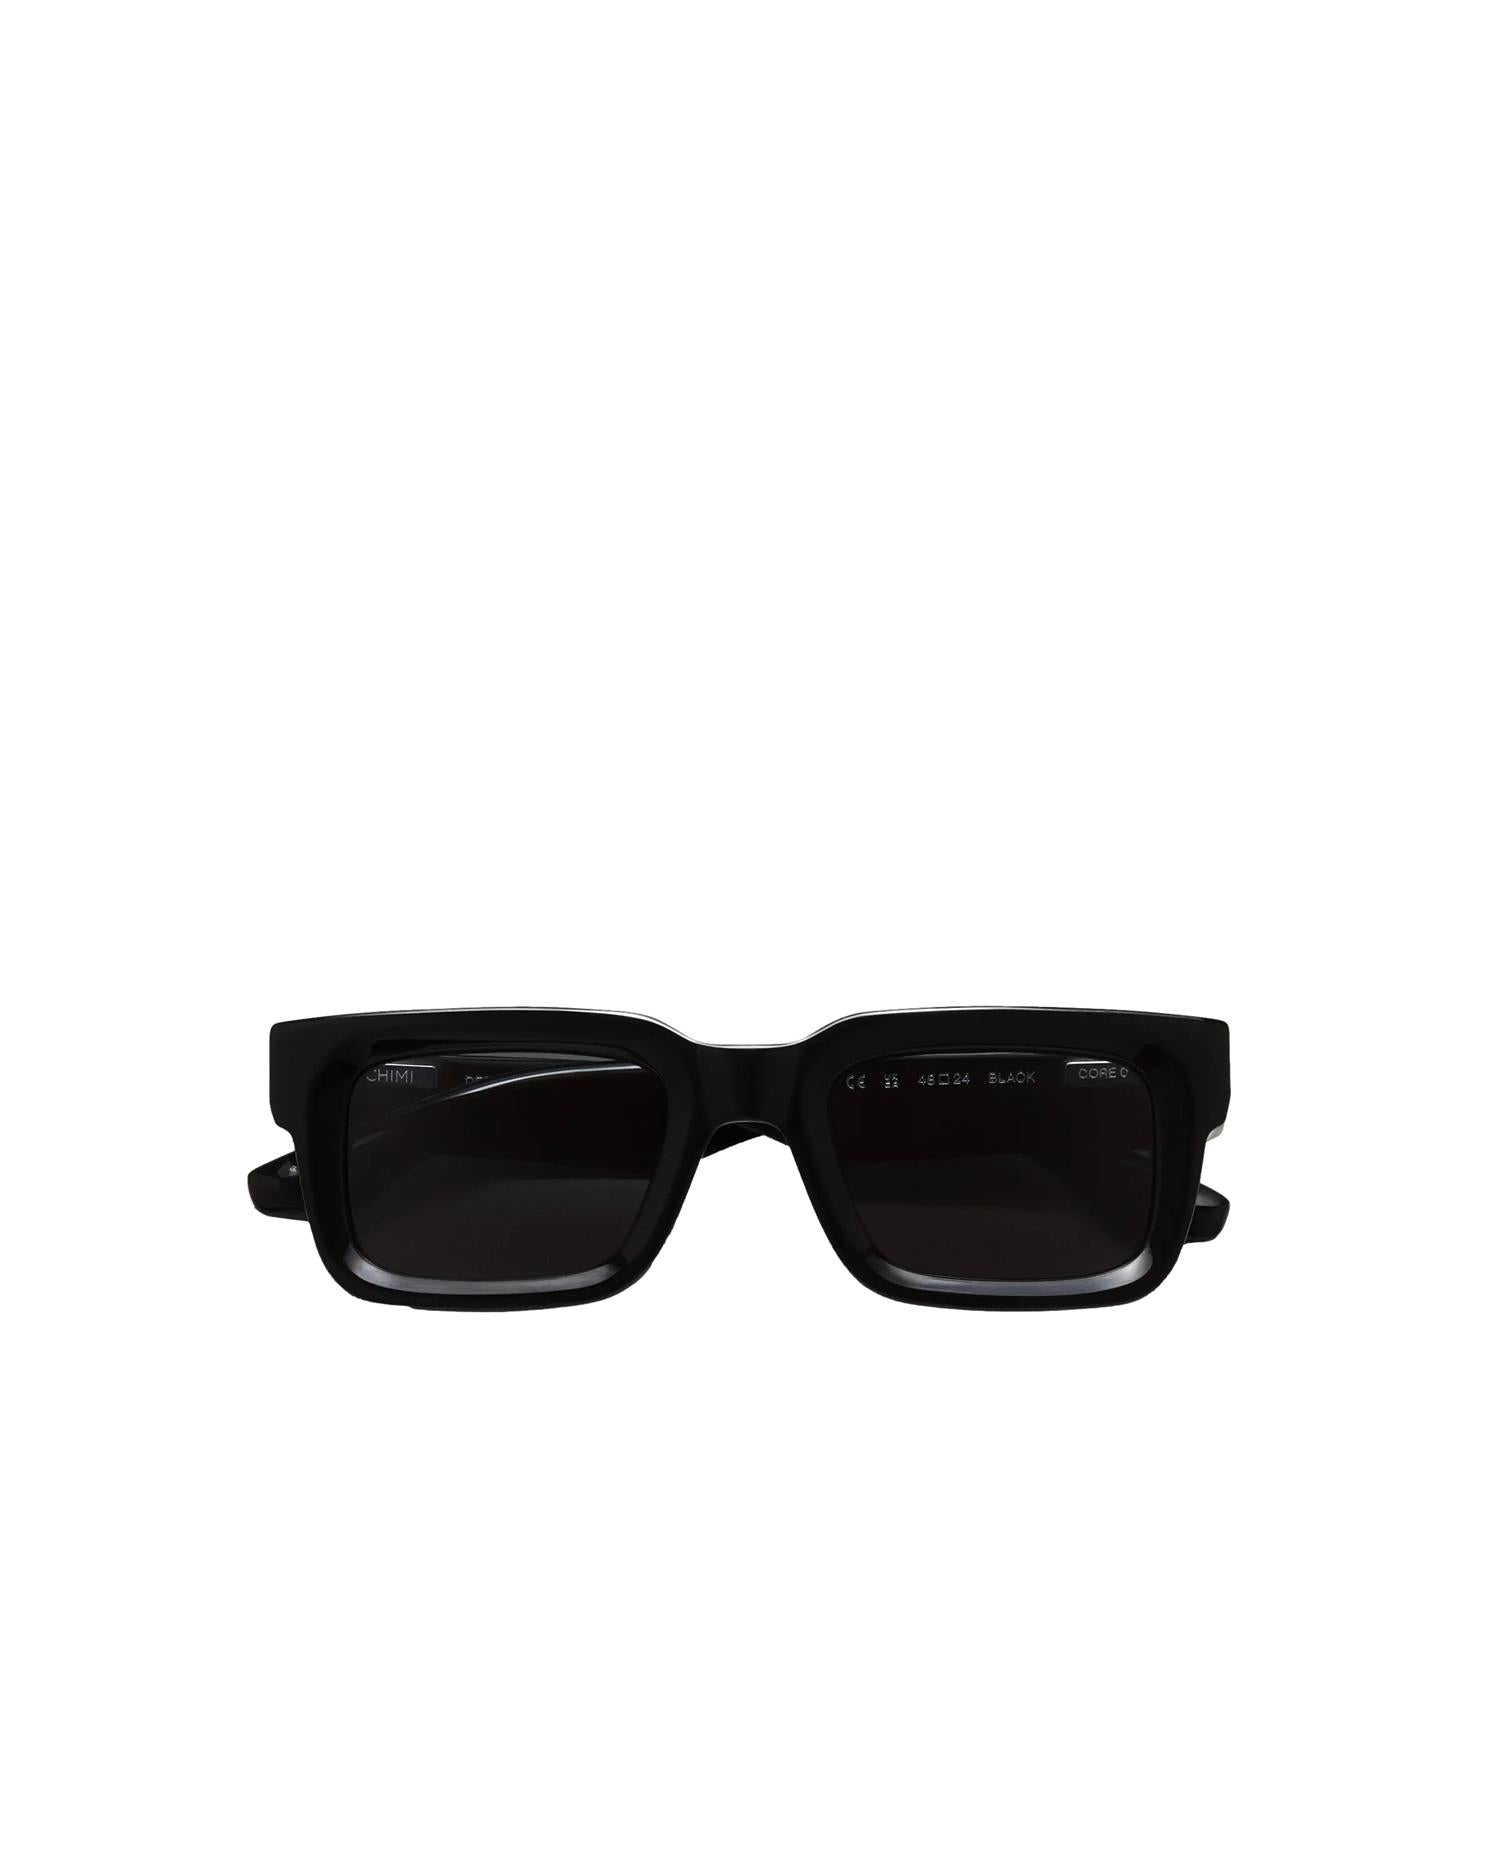 Shop Chimi Eyewear Black 05 Solbriller Sort her - Norsk, rask levering ikkebutikk.no